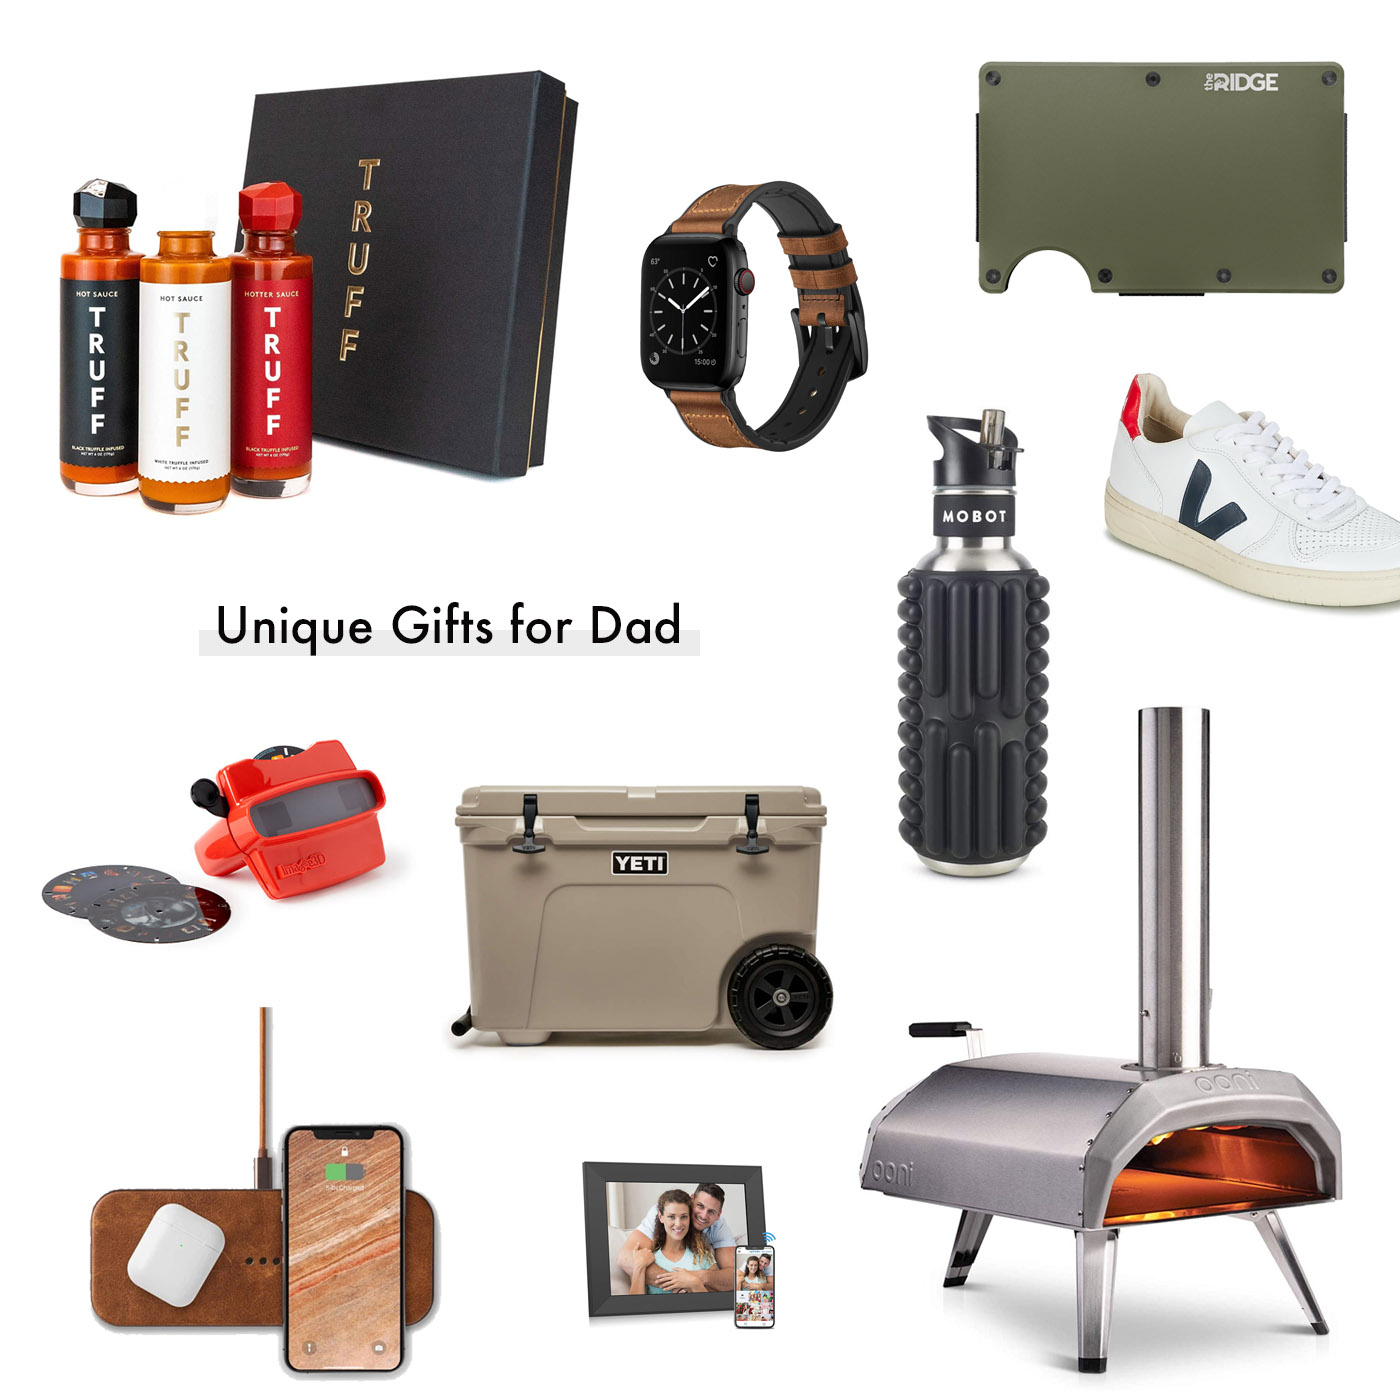 https://greenweddingshoes.com/wp-content/uploads/2021/06/unique-gifts-for-dad.jpg